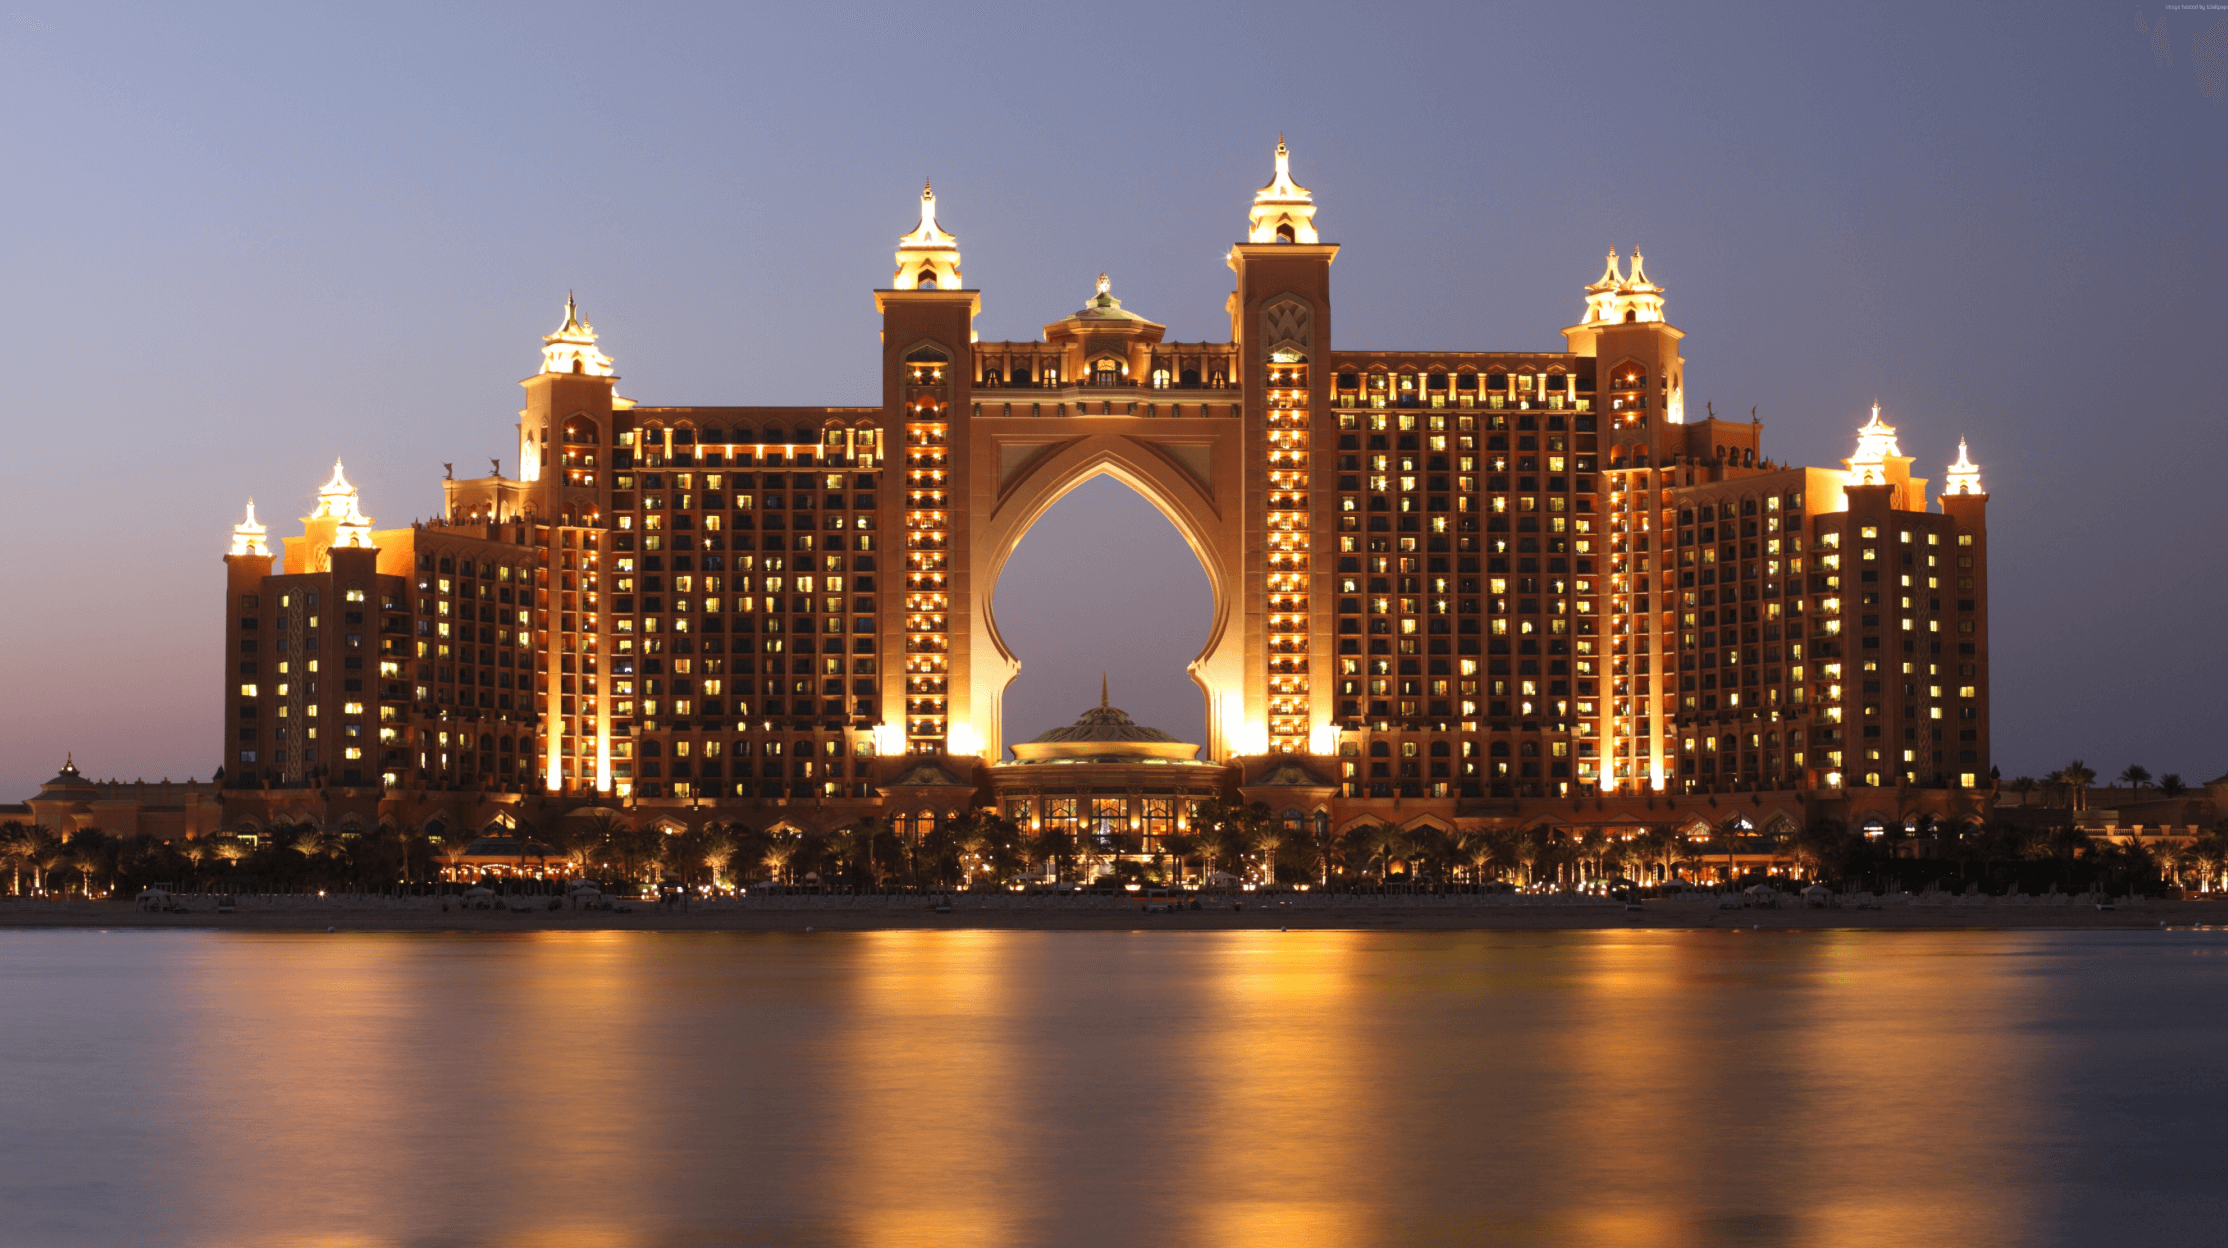 Overnight at Staycation in Atlantis Dubai